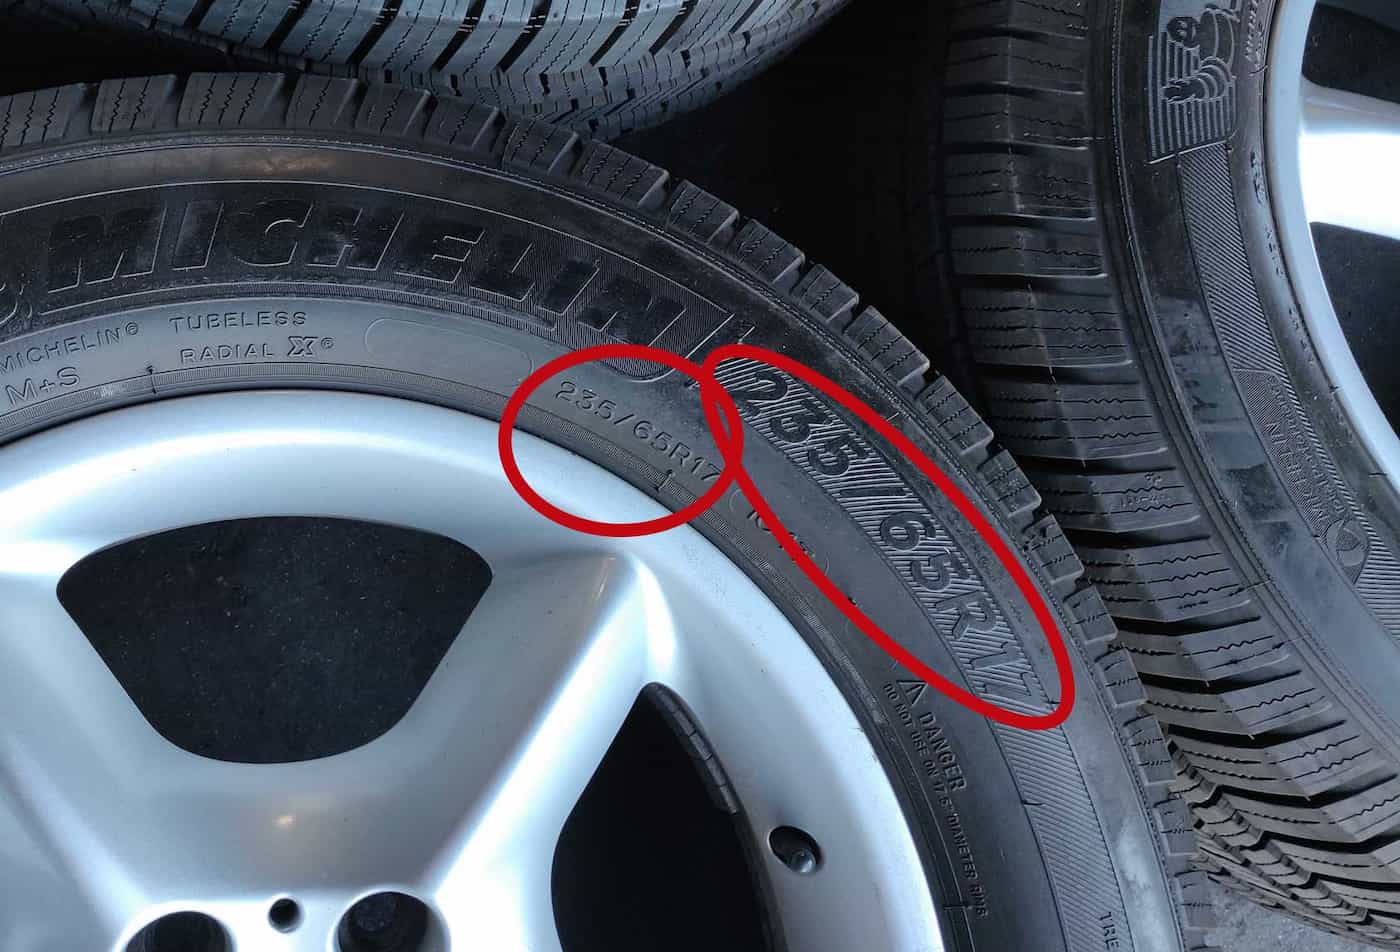 tire sizes